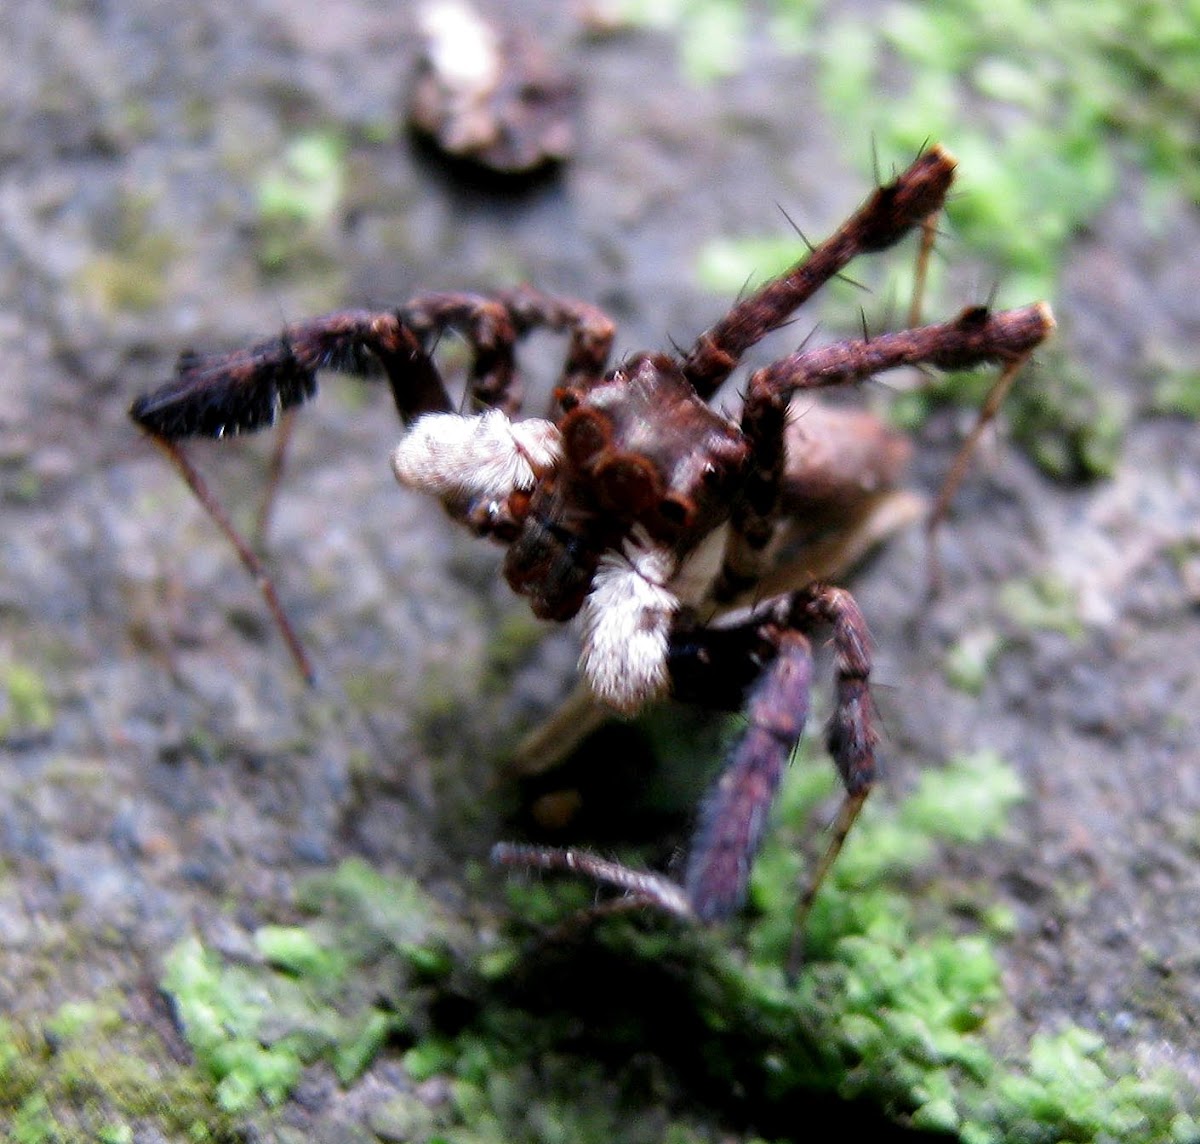 Portia Jumping Spider